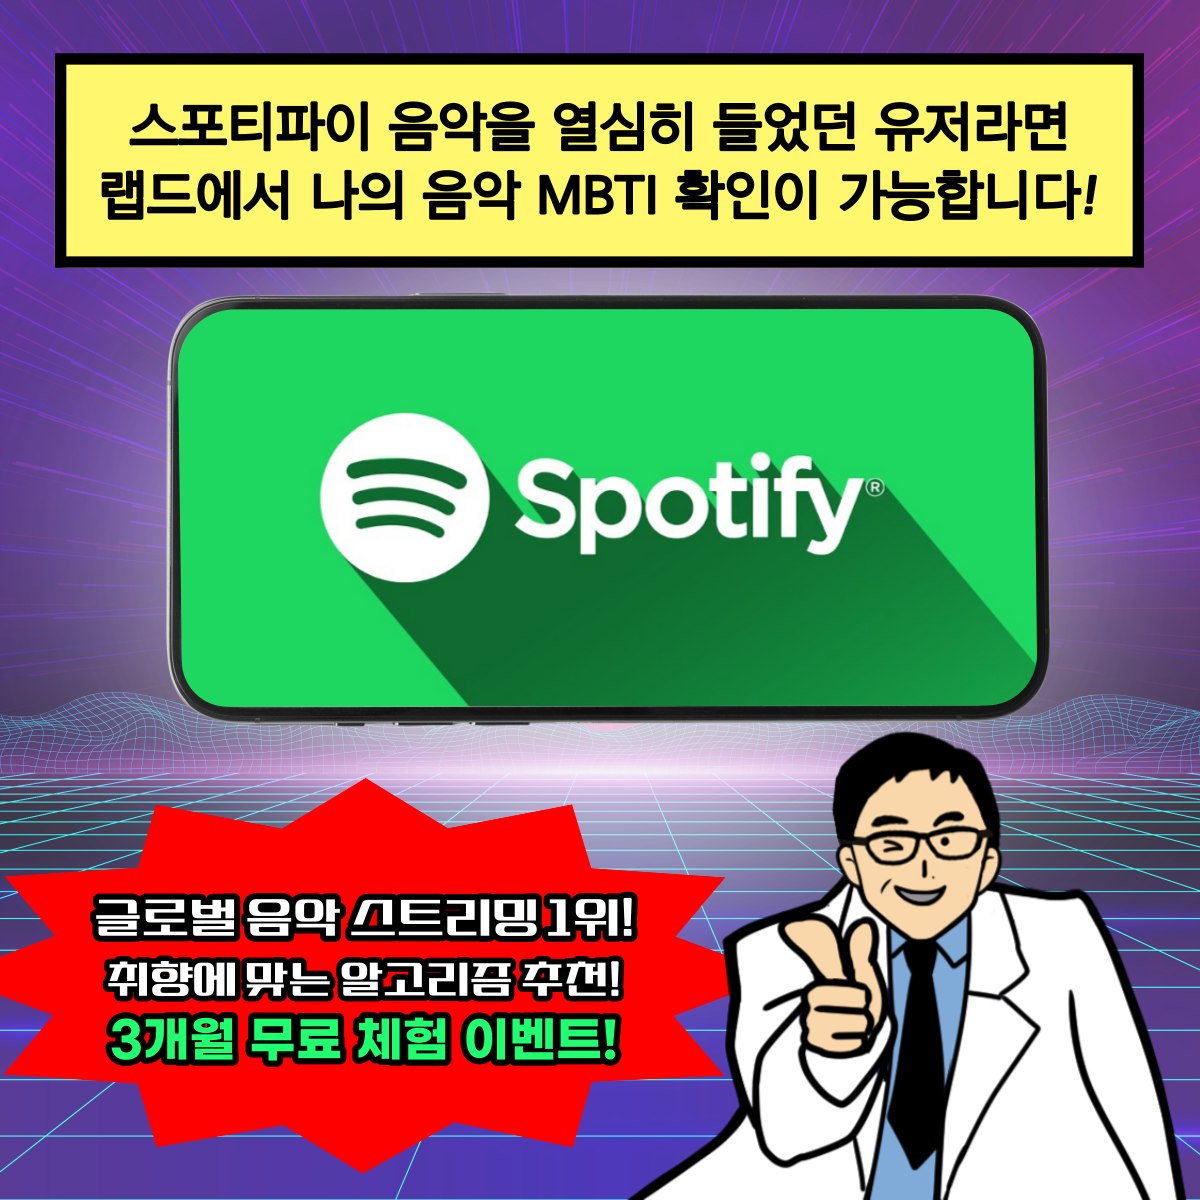 MBTI 유형별 음악취향